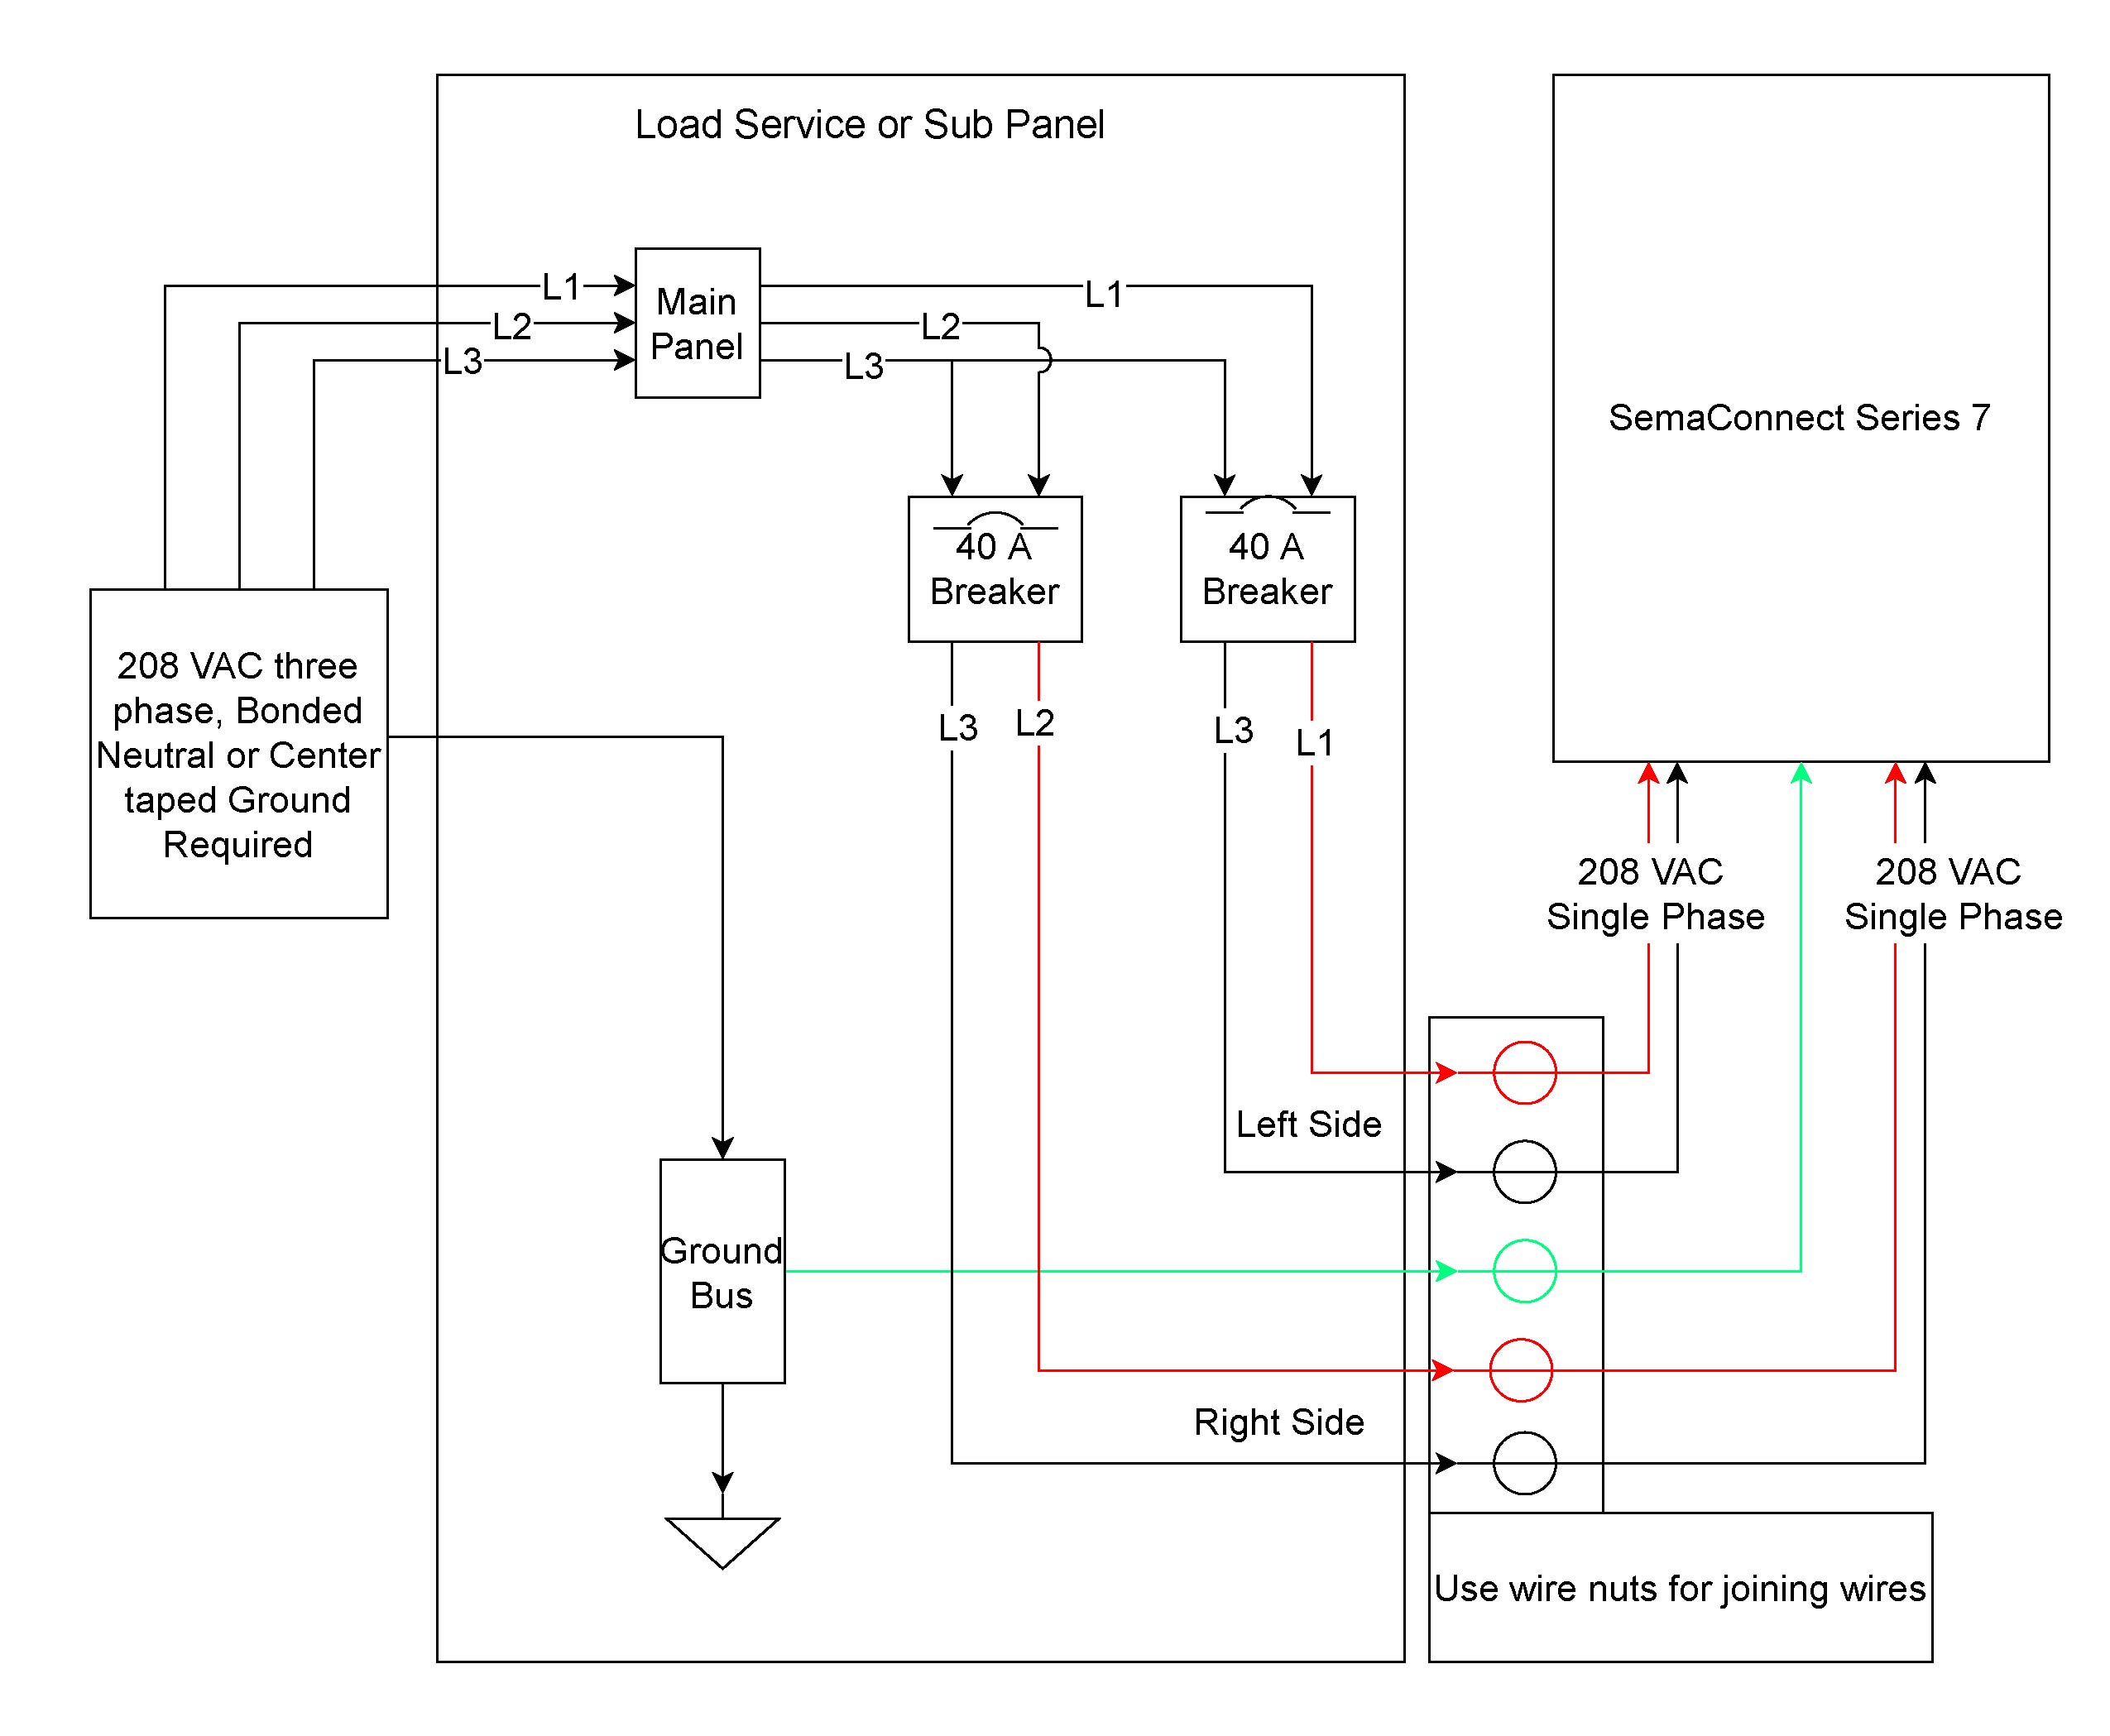 x500 john deere pto switch wiring diagram